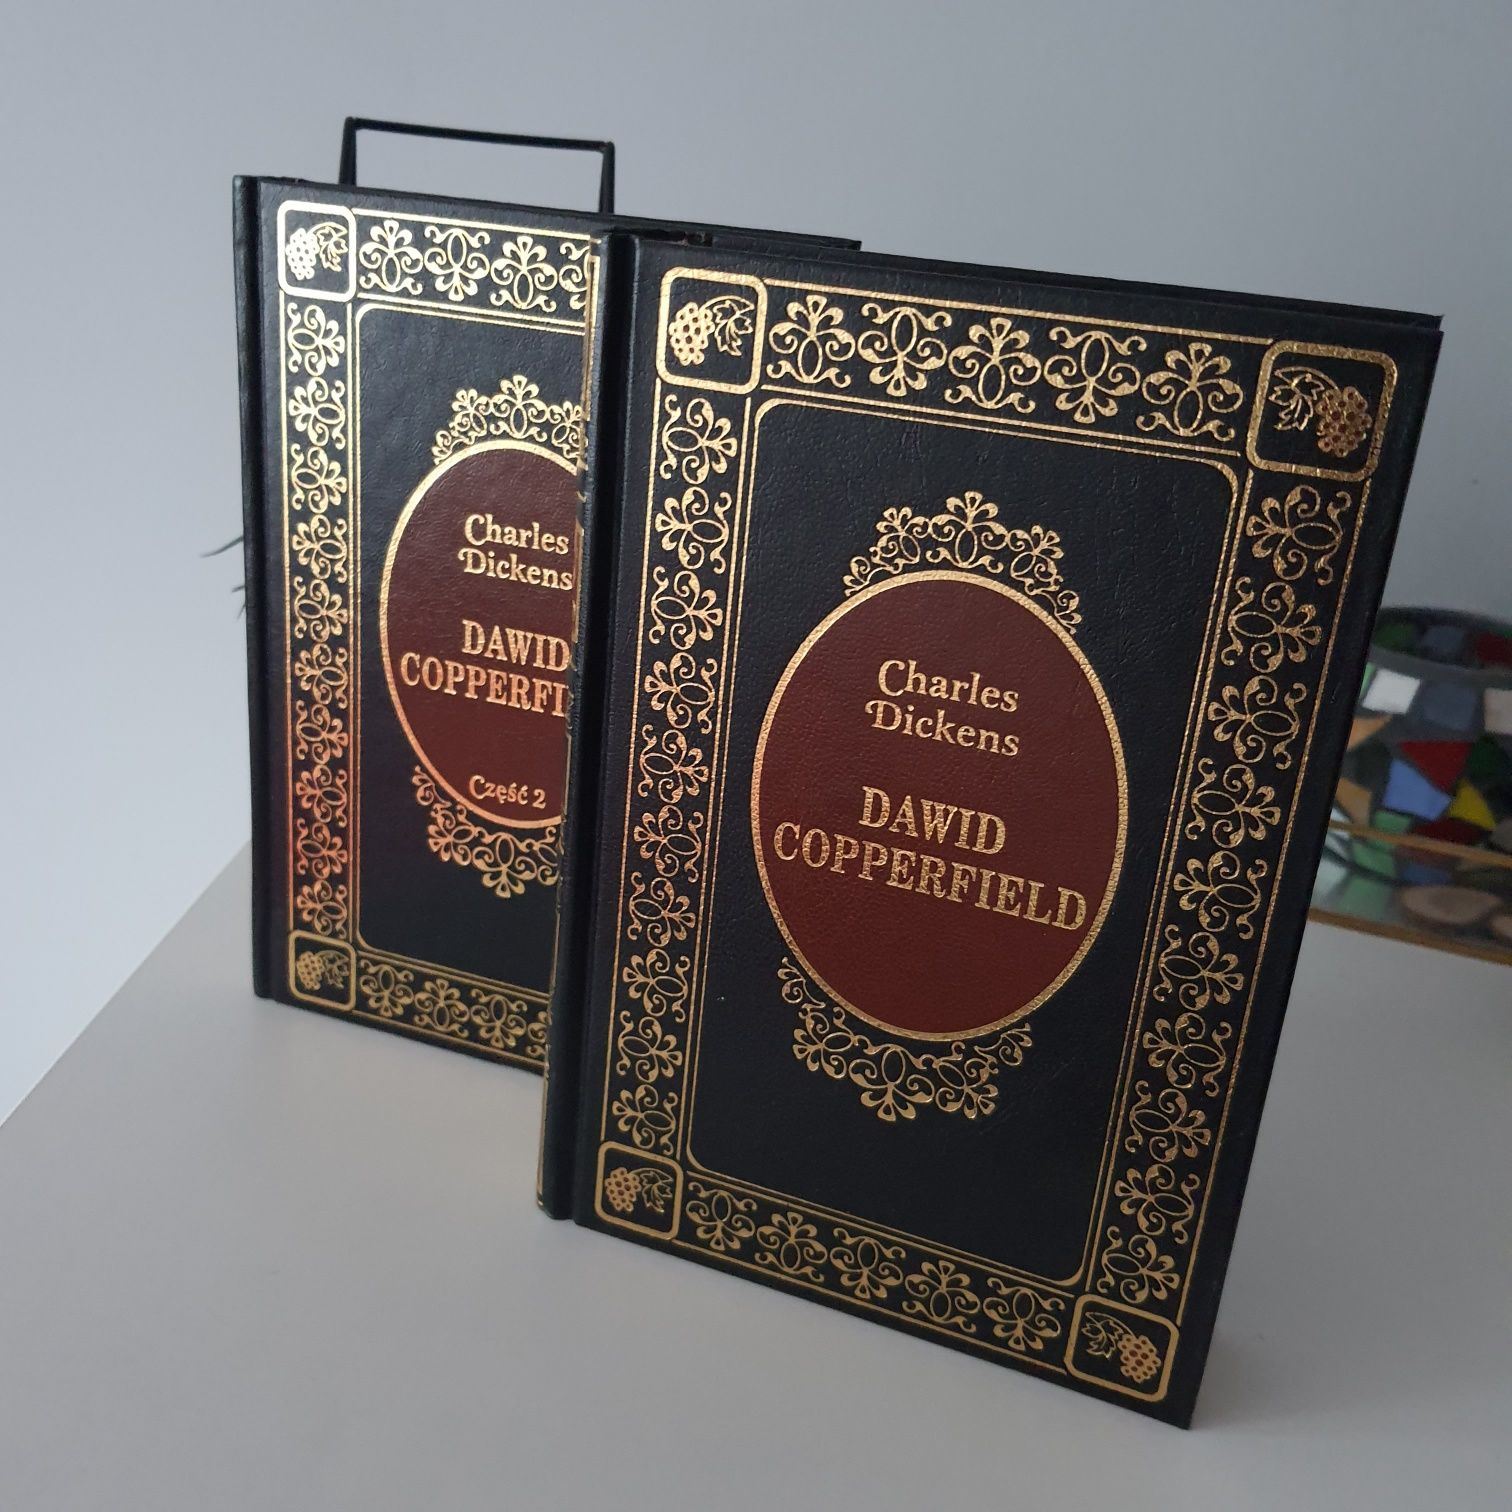 David Copperfield Dickens 1 i 2 tom książka kolekcjonerska Ex libris